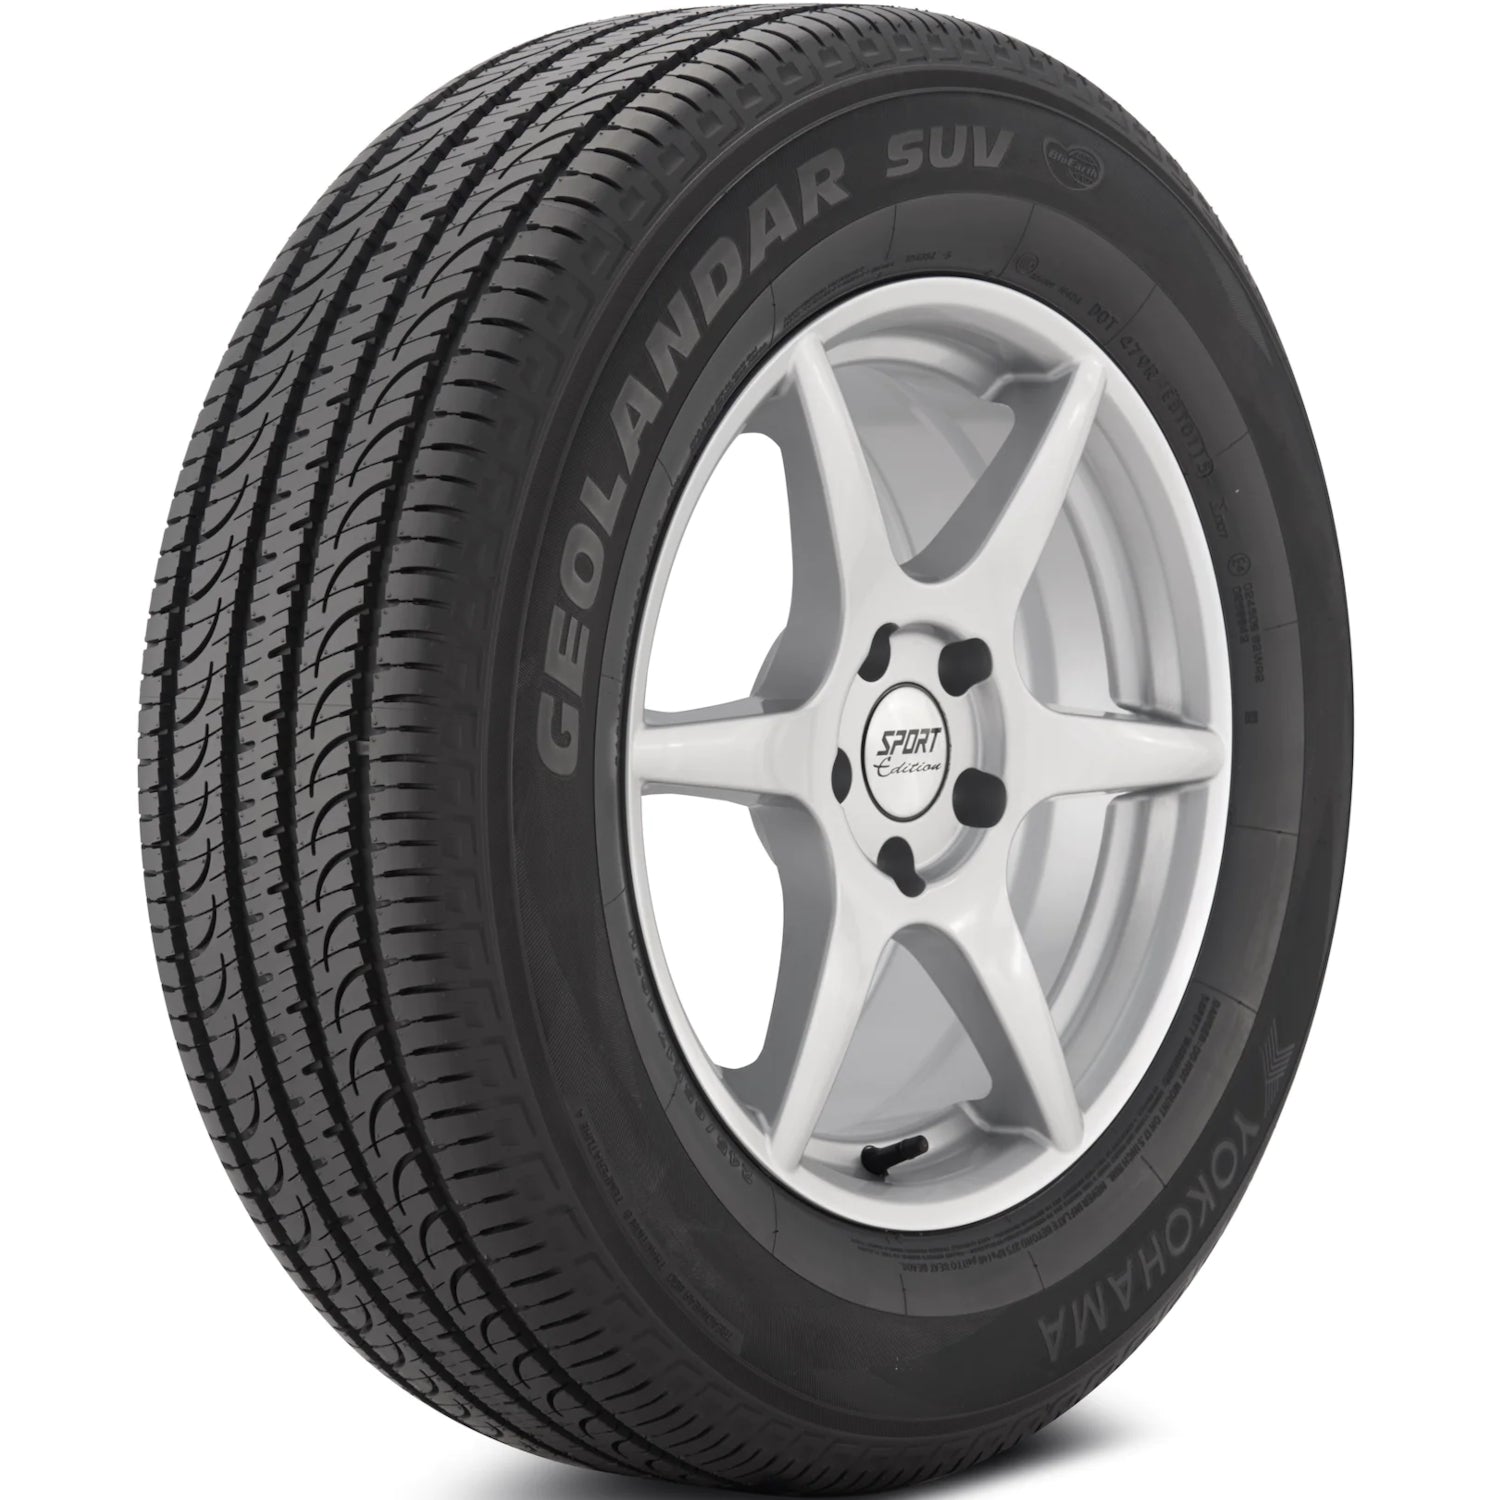 YOKOHAMA GEOLANDAR G055 255/55R18 (28.8X10.4R 18) Tires